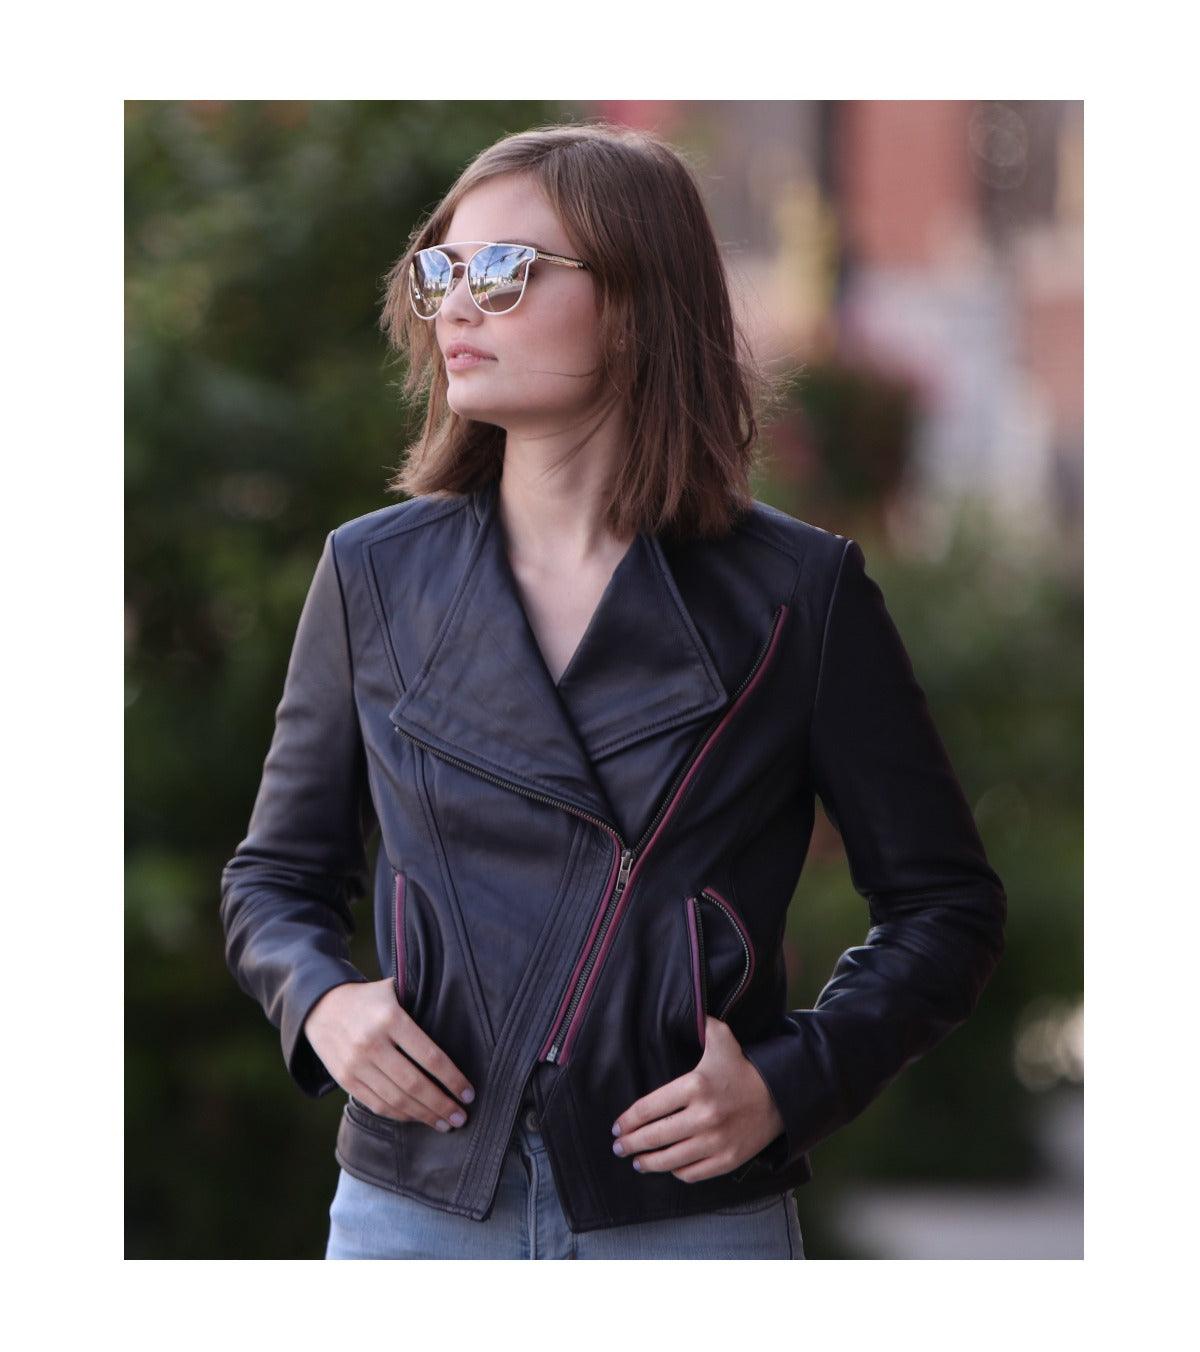 First Manufacturing Trish - Women's Lambskin Leather Jacket - American Legend Rider